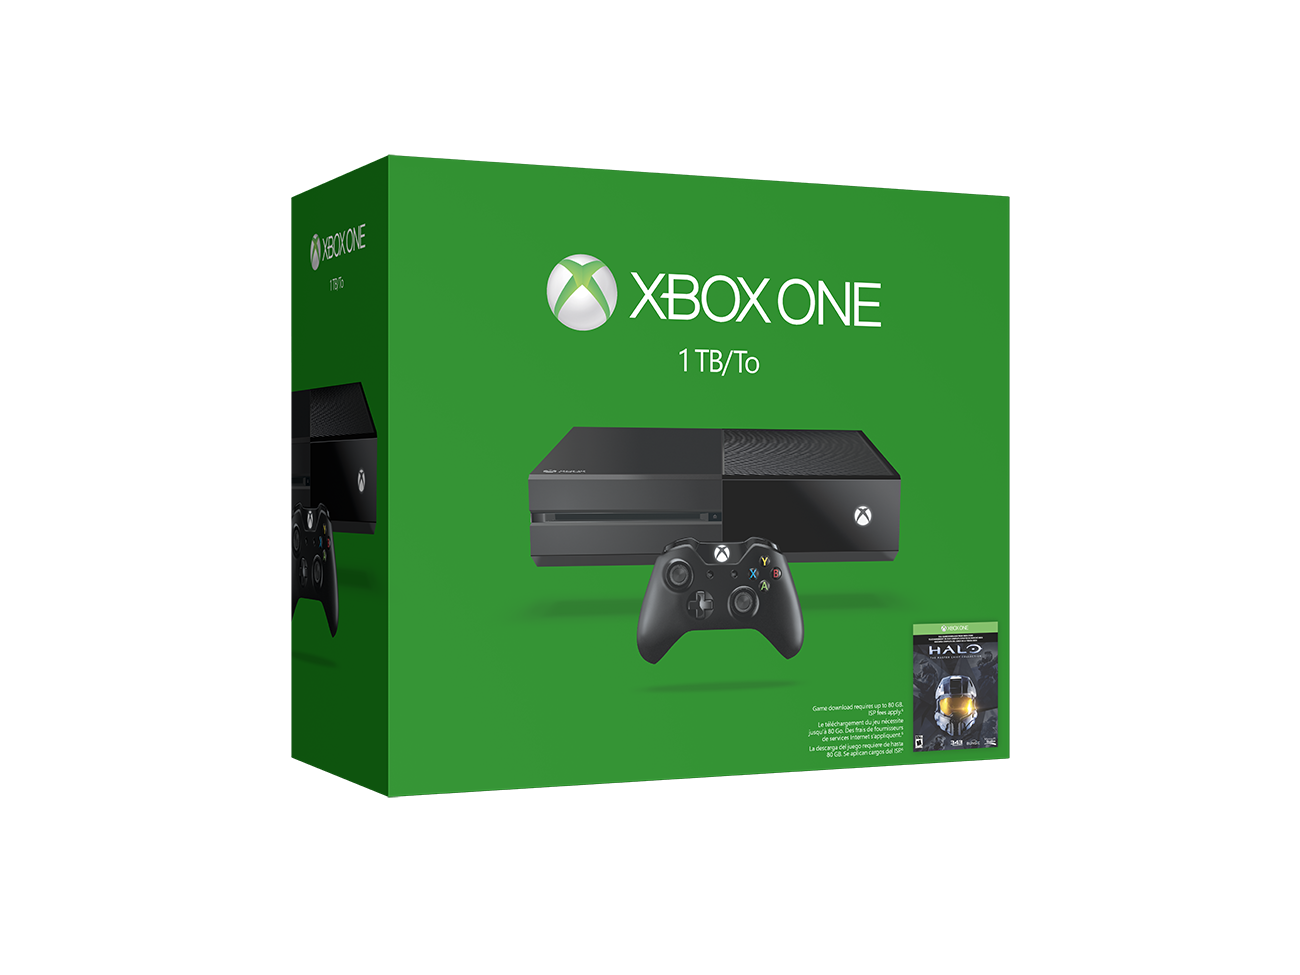 Microsoft anuncia oficialmente la llegada de la Xbox One con 1 TB de